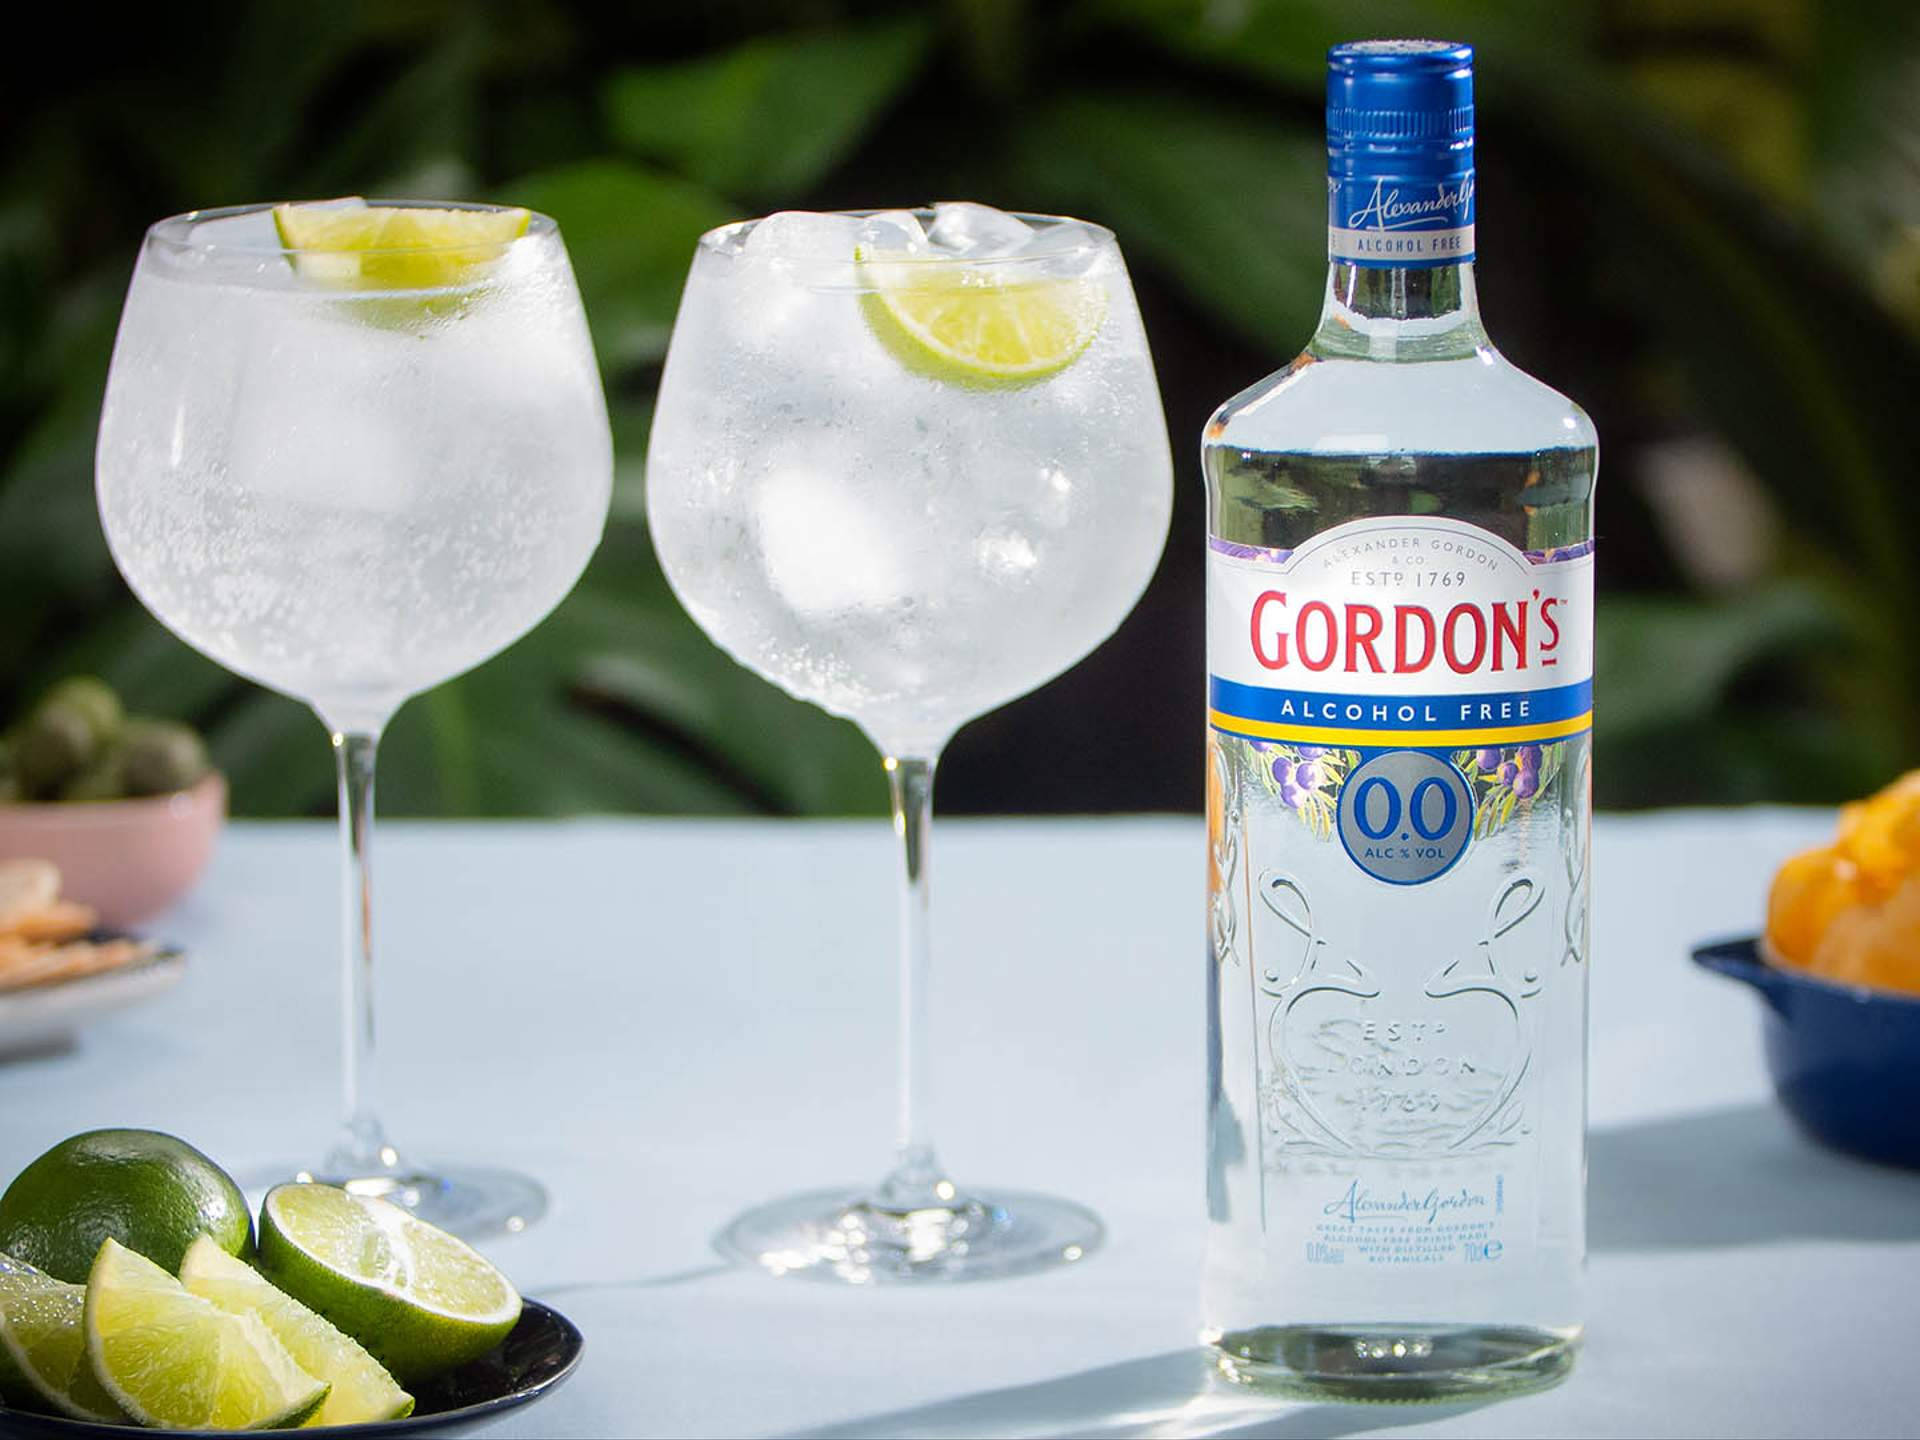 Gordon's Alcohol-free Gin Bottle Wallpaper